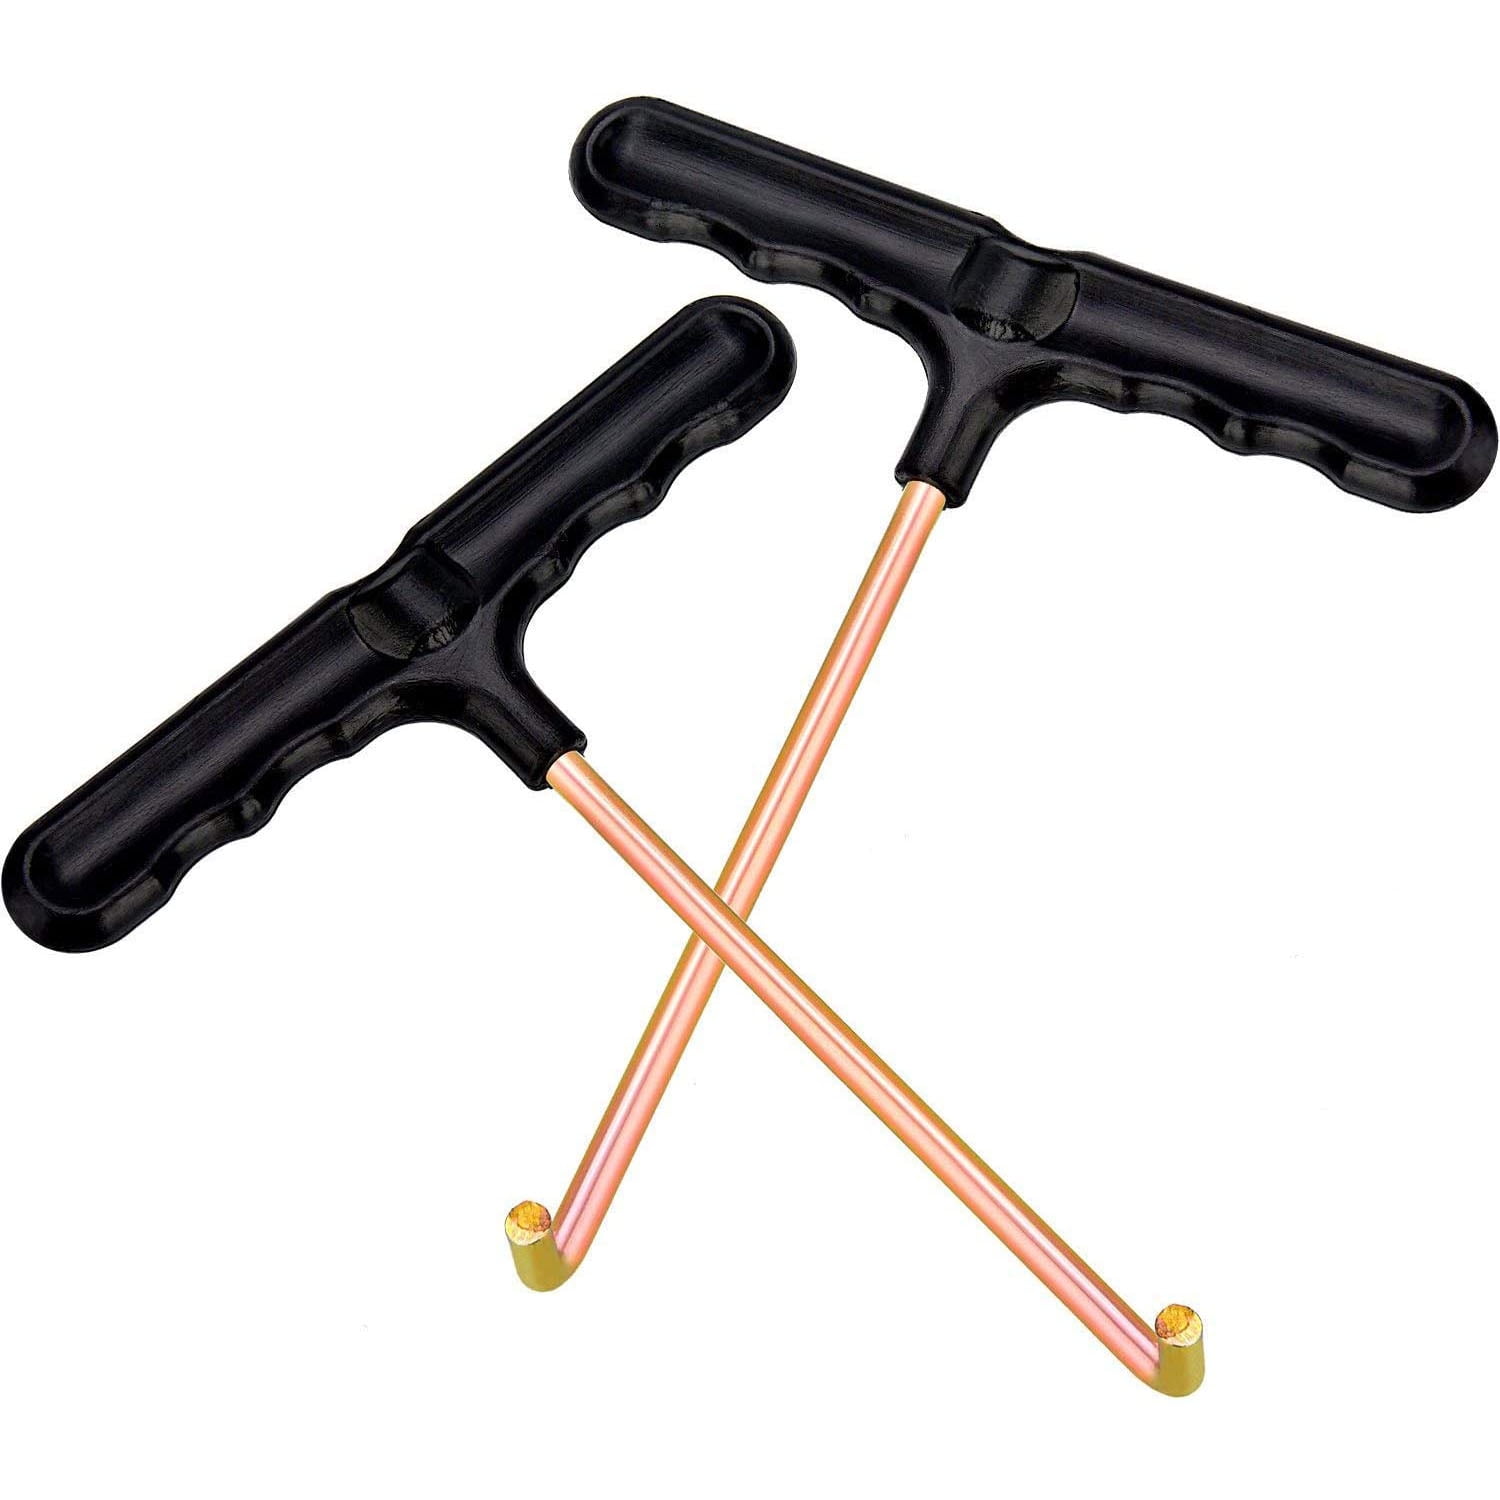 2PCS Spring Tensioner for Trampoline Tool Universal T-hook 13cm 